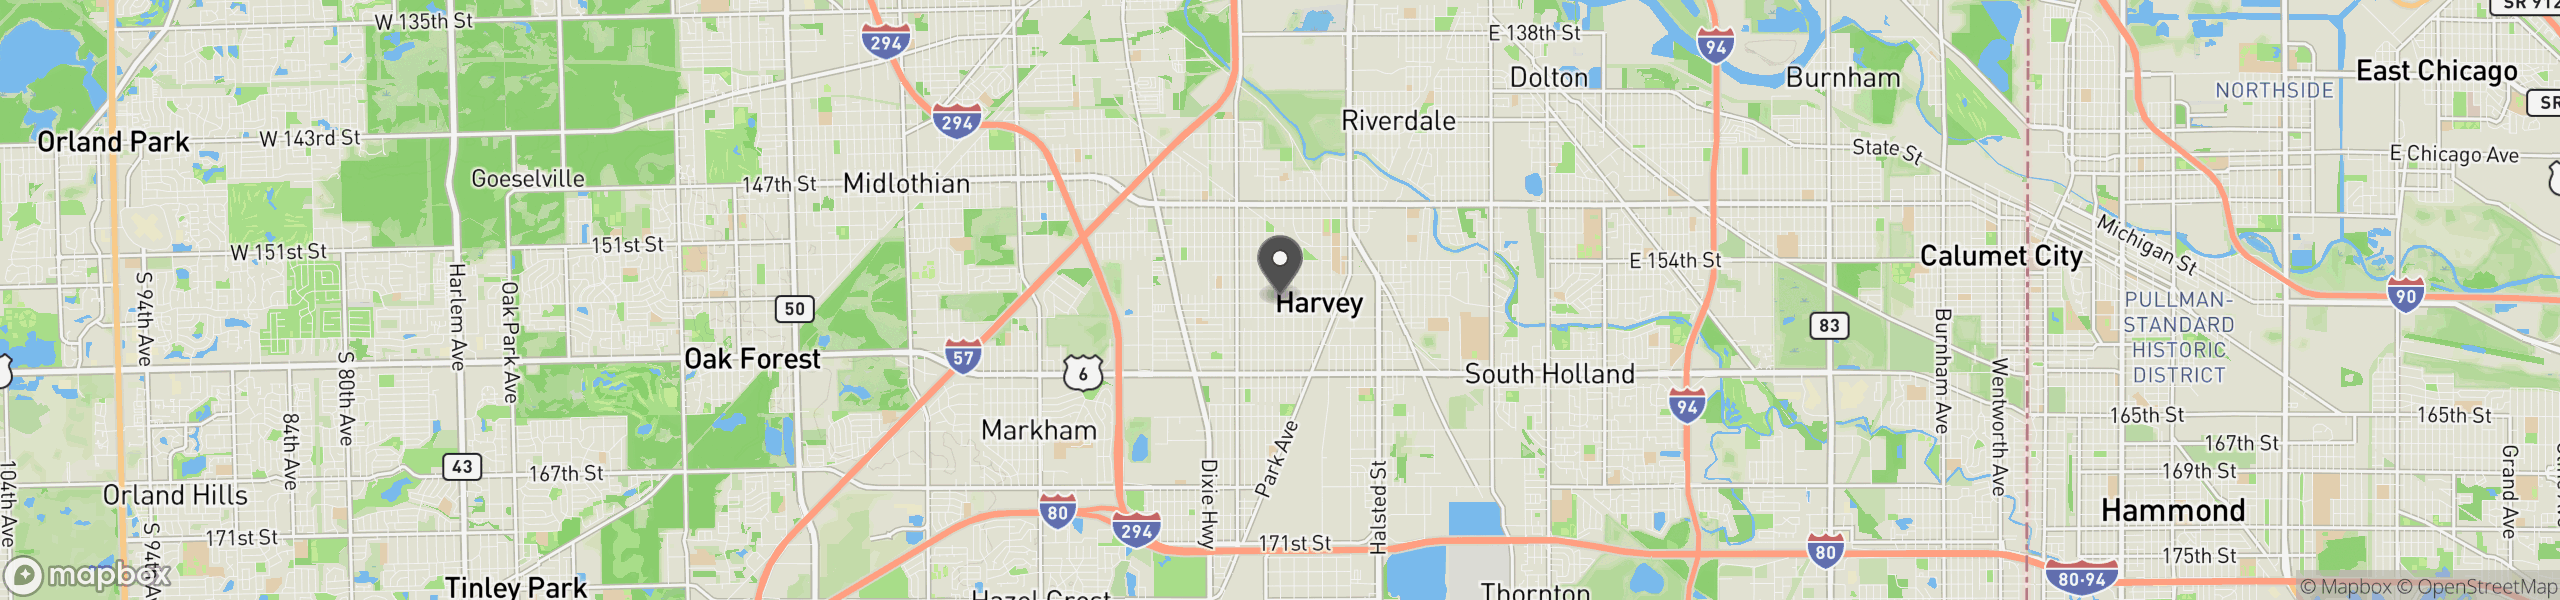 Harvey, IL 60426